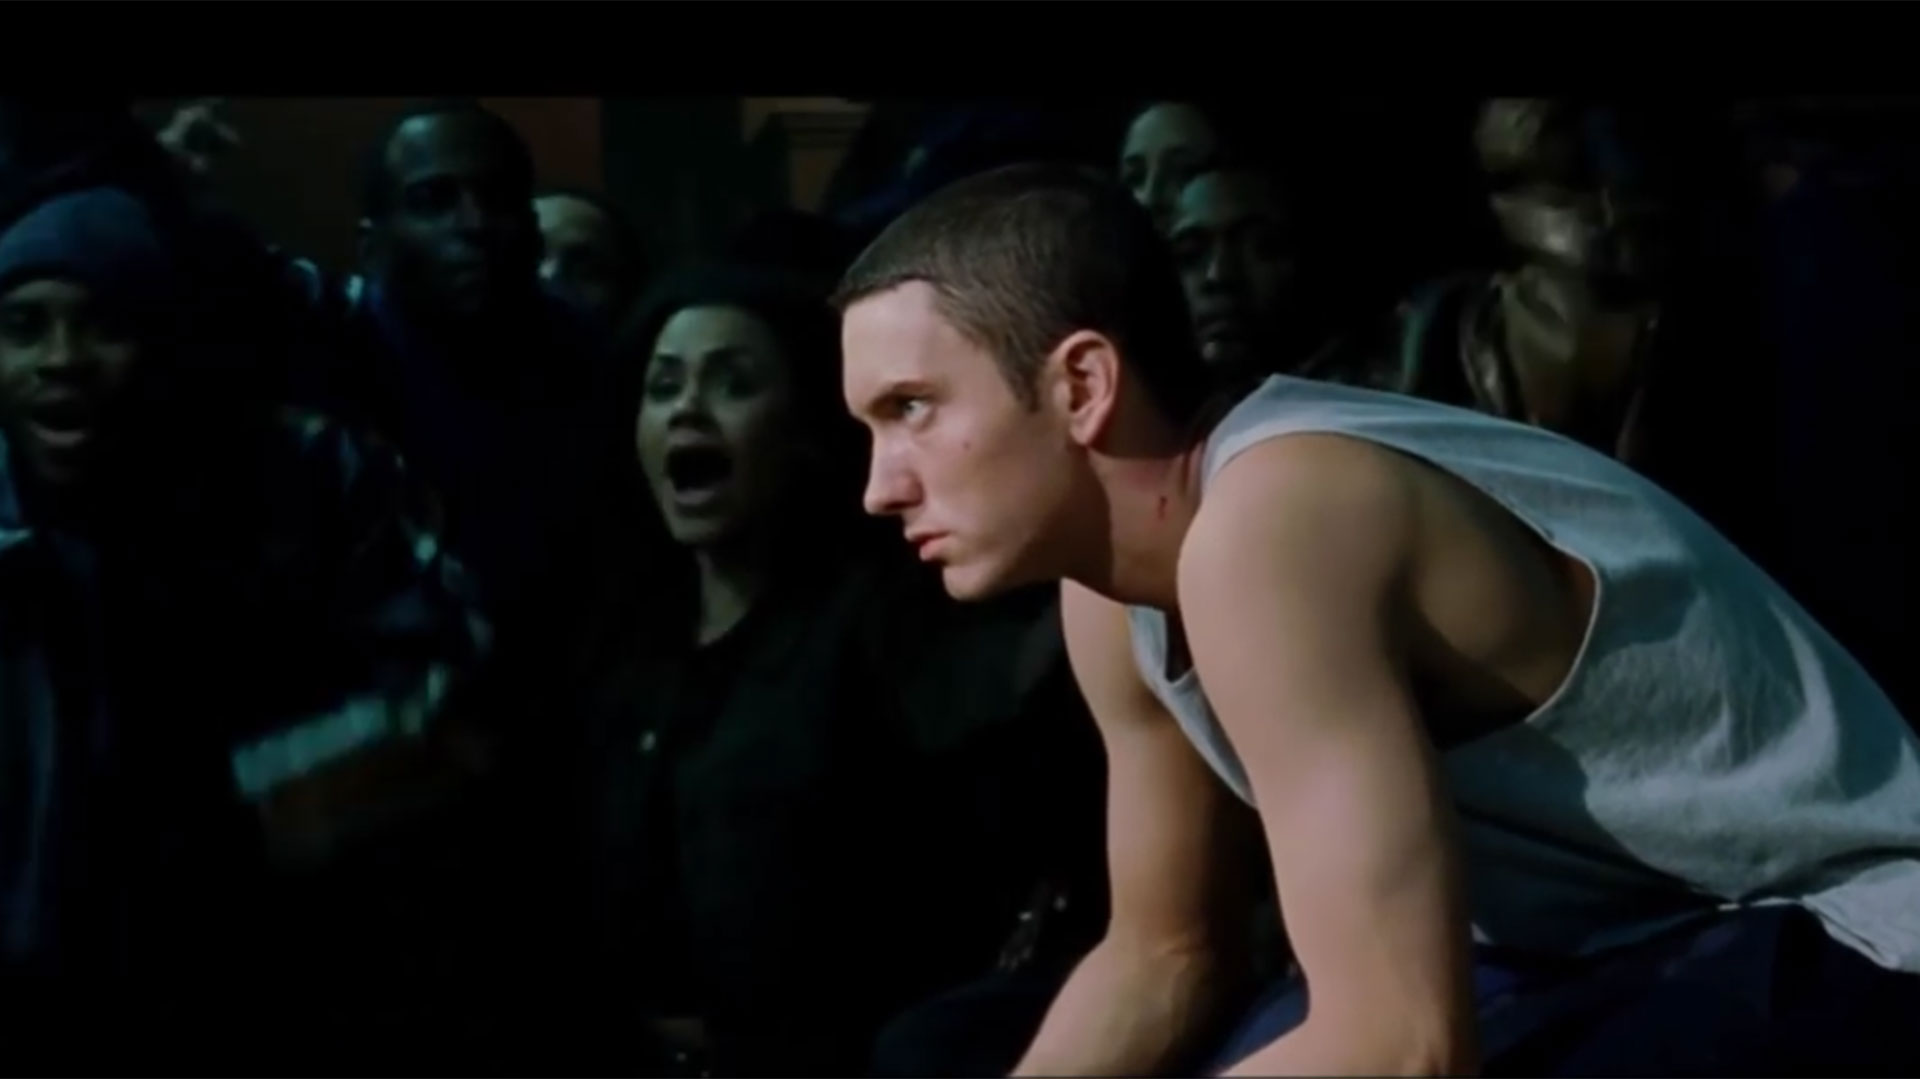 Eminem on "Lose Yourself"